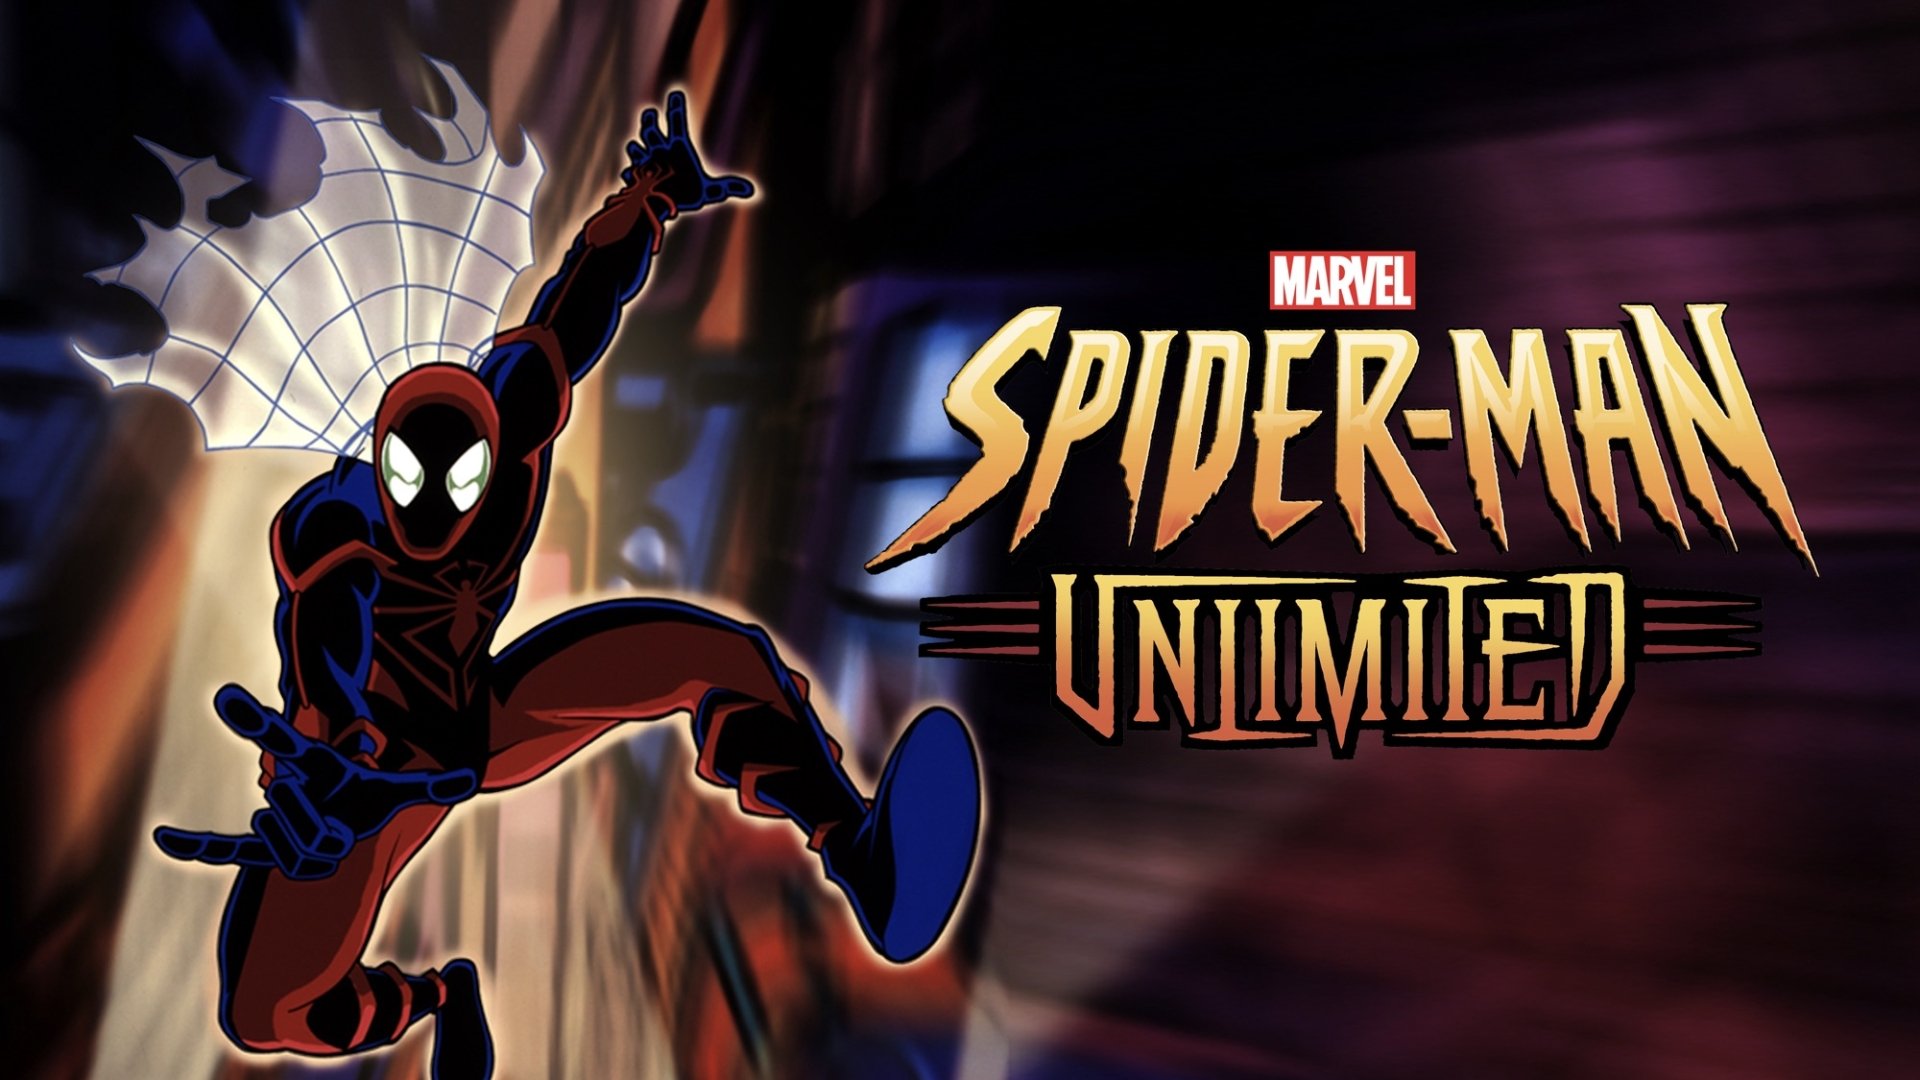 Spider man unlimited wallpaper